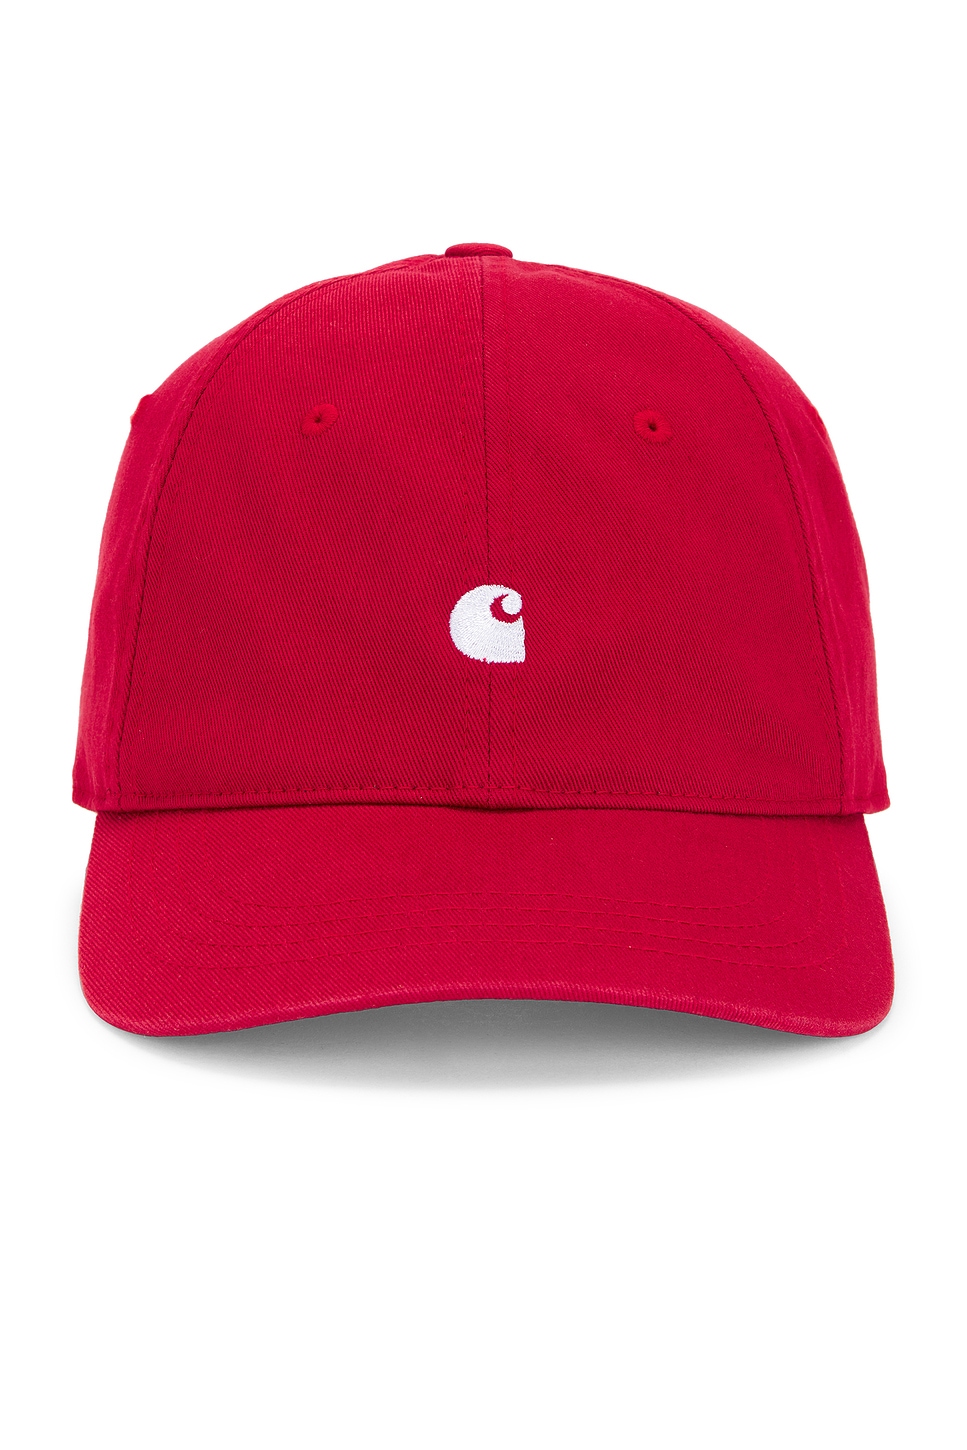 Madison Logo Cap in Red